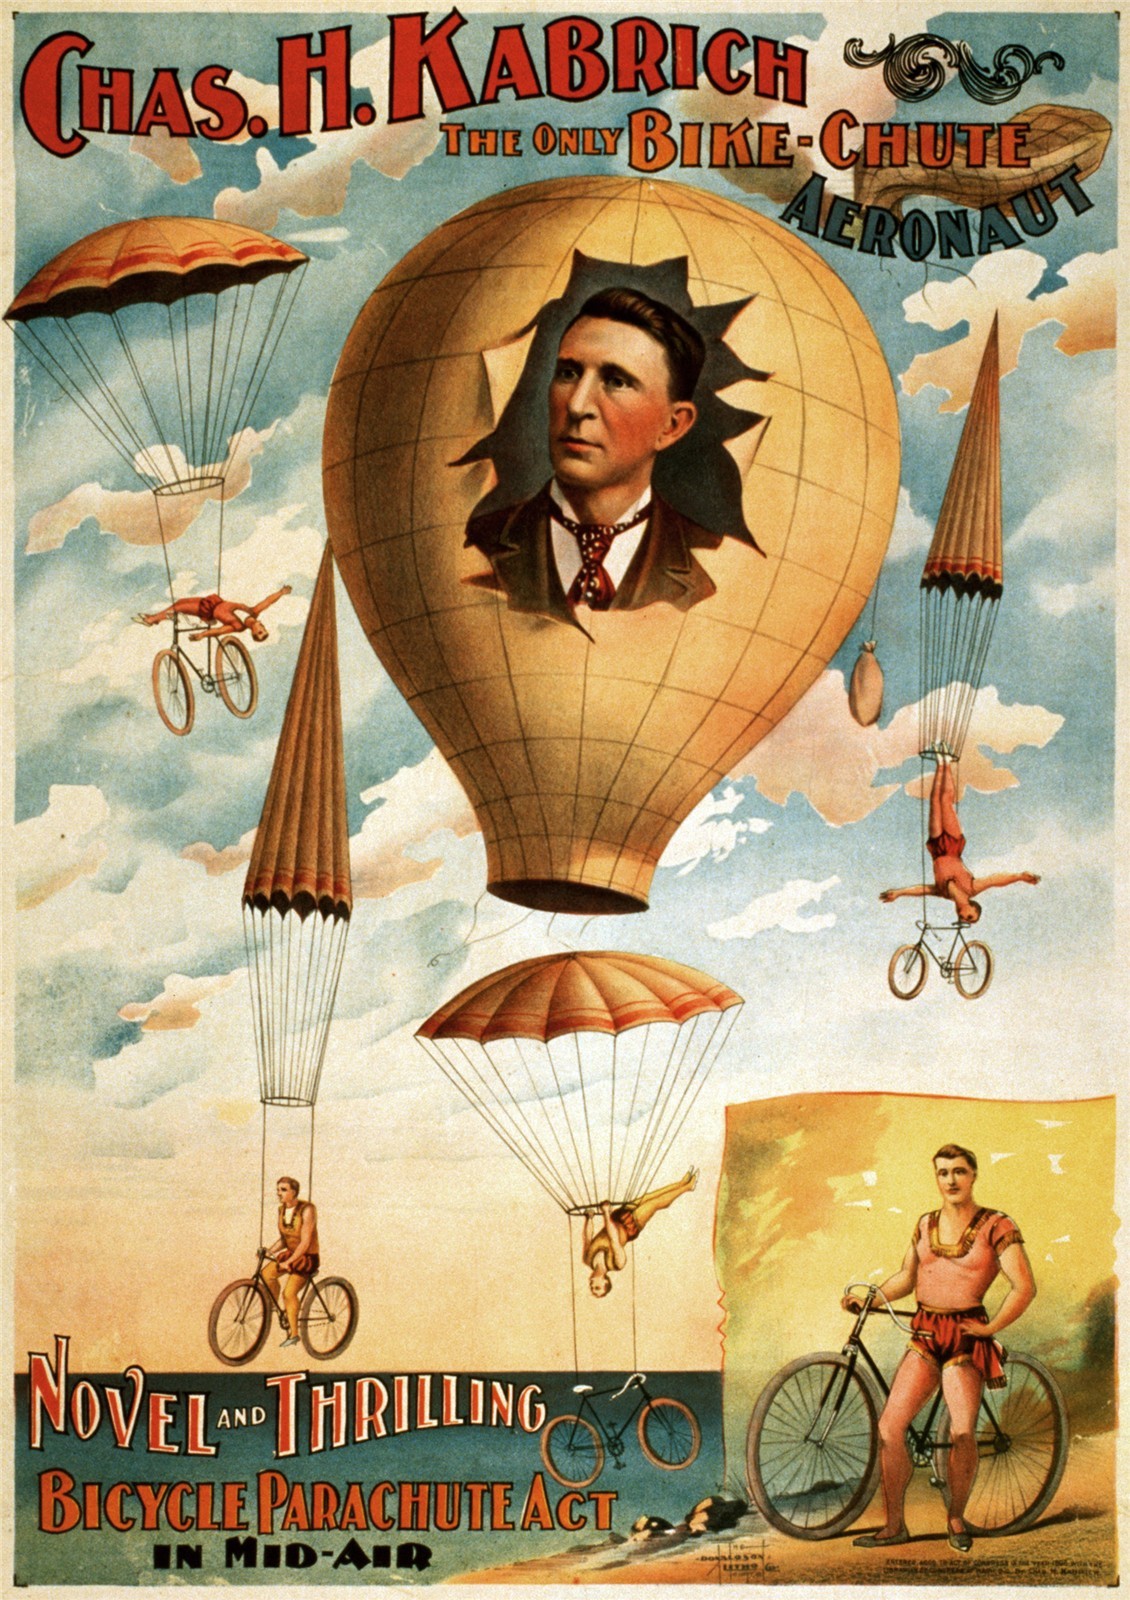 Chas. H. Kabrich, the only bike chute aeronaut, poster, 1886